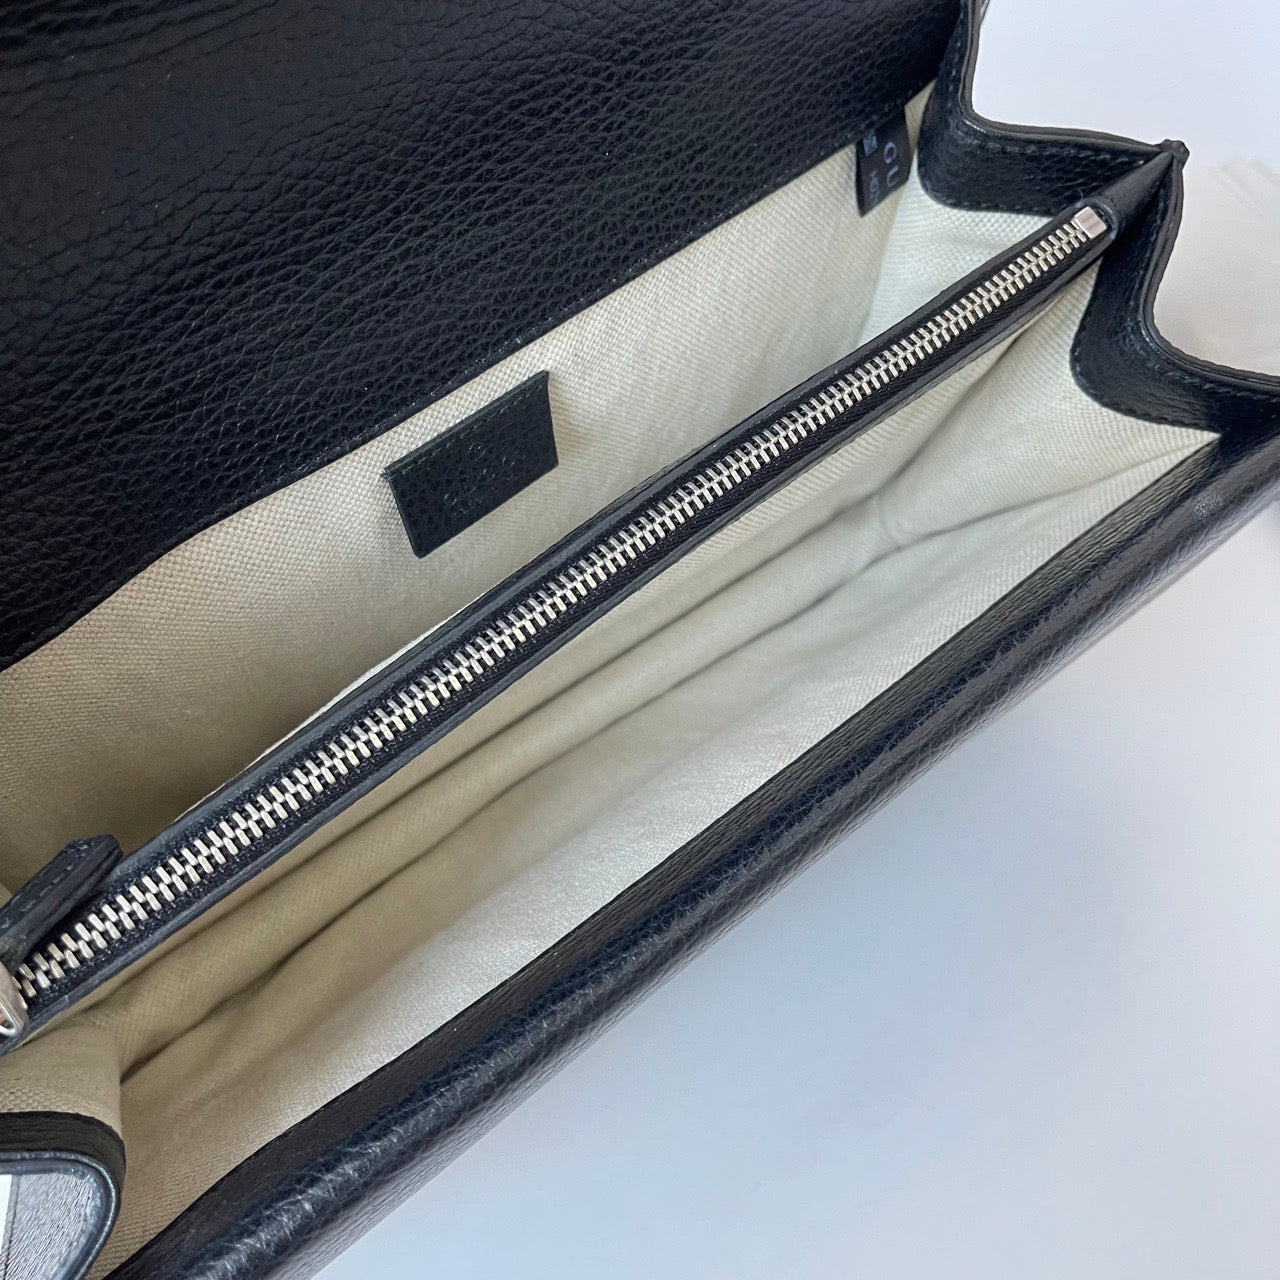 Preloved Gucci DIONYSUS GG SUPREME Small Bag